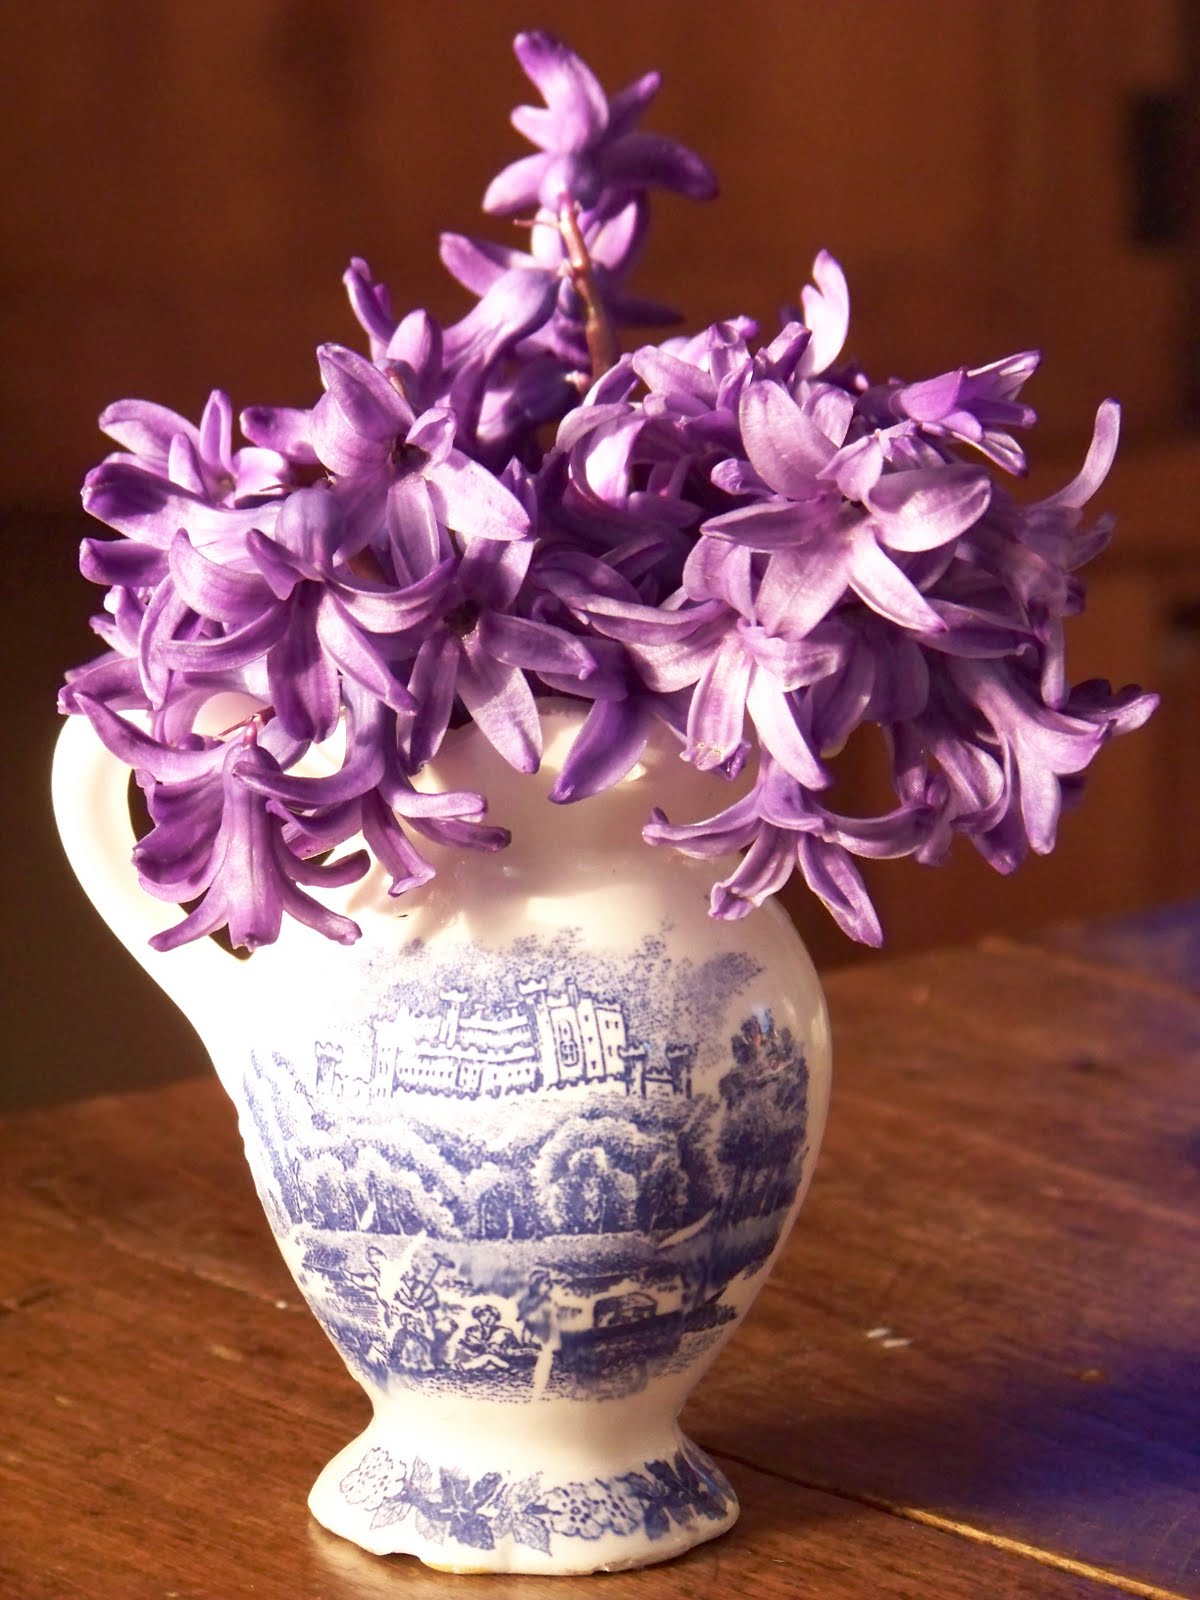 I Love My Garden: Hyacinth Indoors